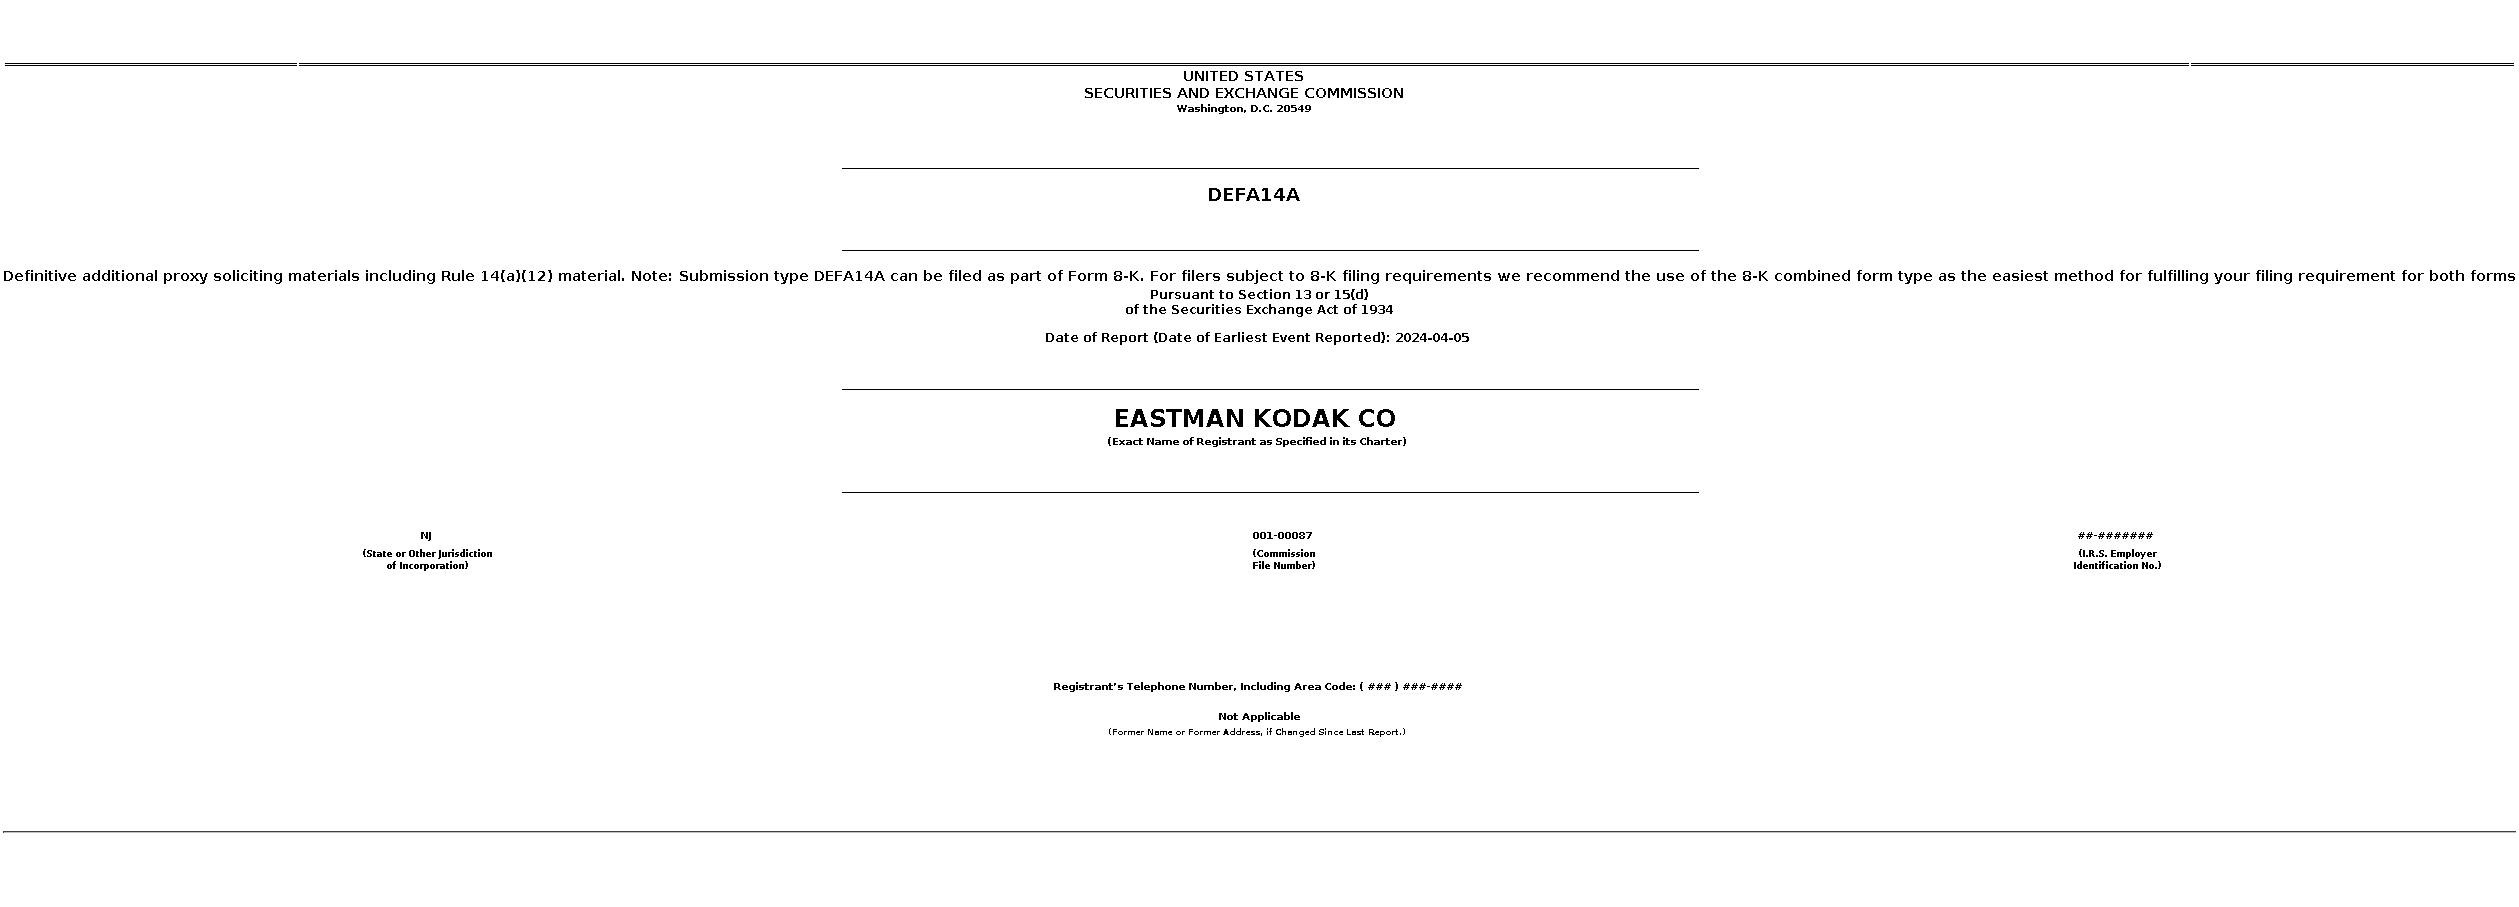 Eastman Kodak Company (KODK) Stock Price, News, Quote & History - Yahoo  Finance